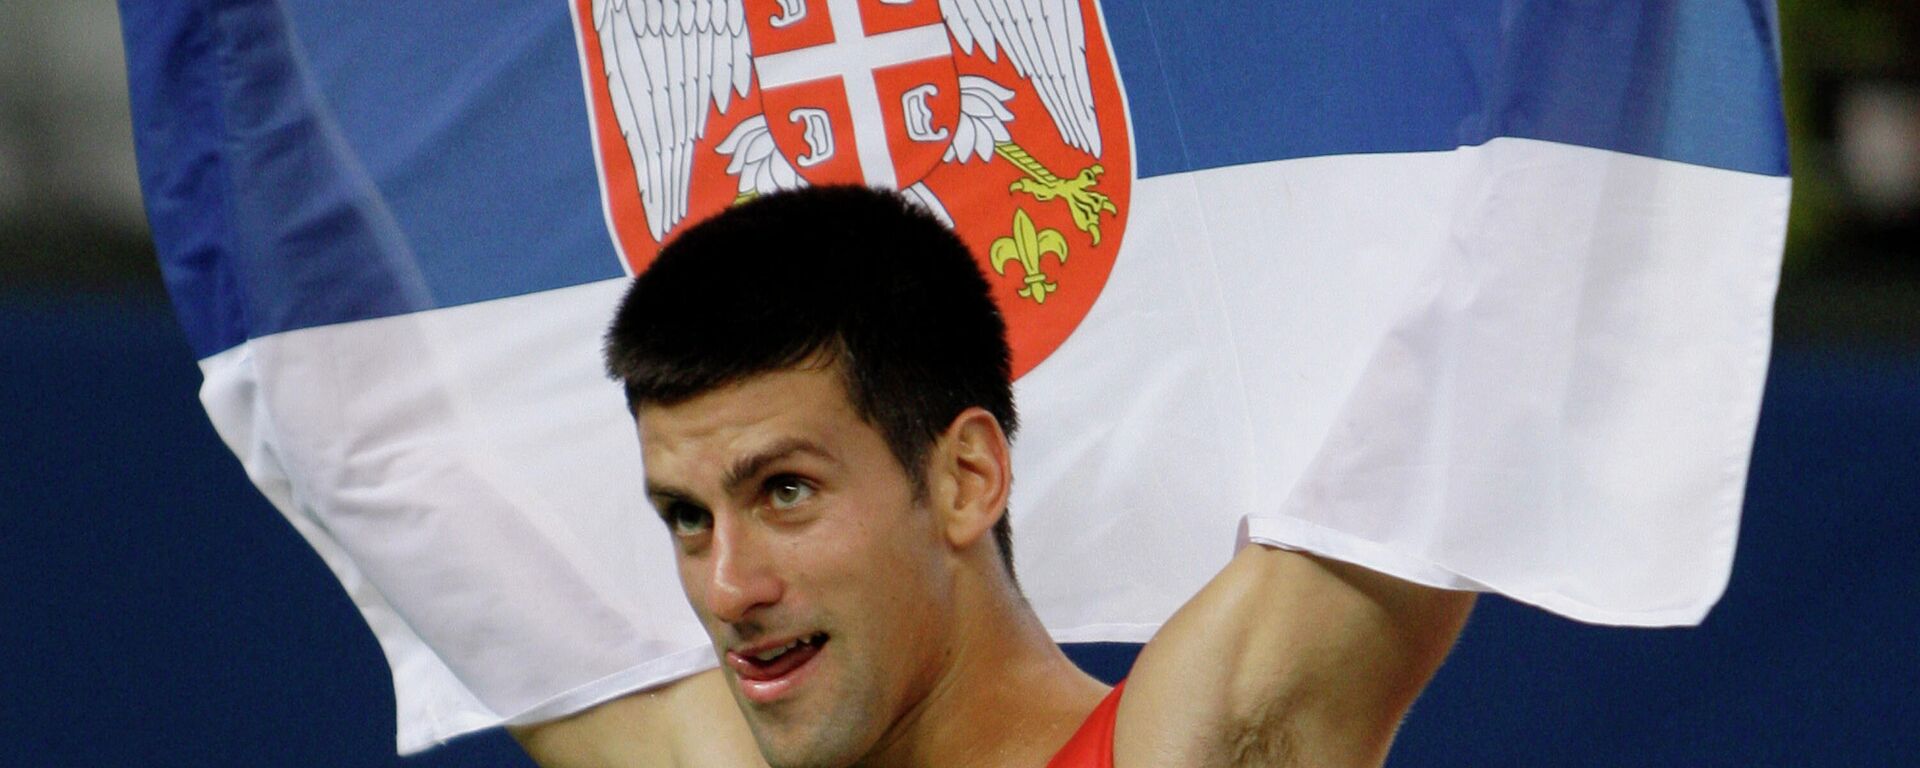 Najbolji teniser sveta Novak Đoković sa zastavom Srbije - Sputnik Srbija, 1920, 18.01.2022